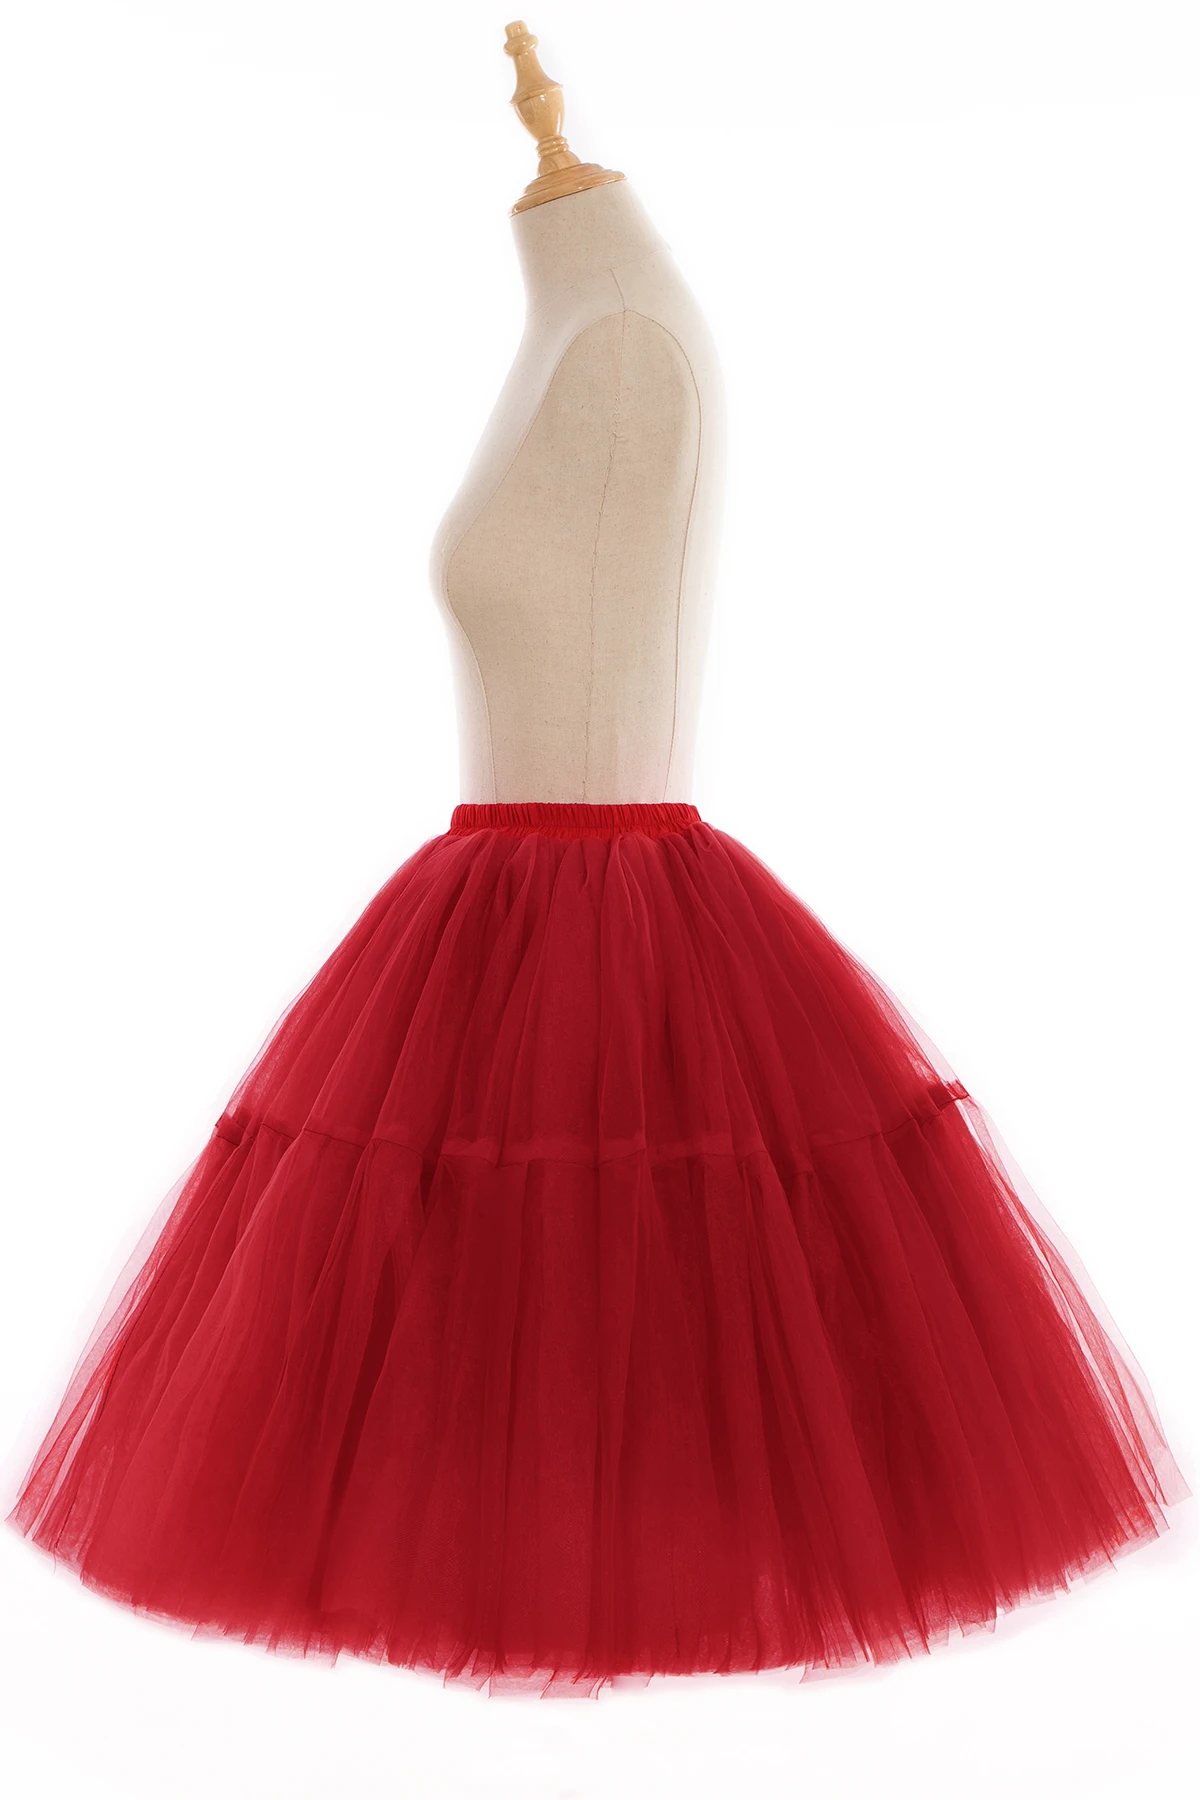 Fashion Red Multi-Layers Tulle Skirts Women Elastic Waist Puffy Knee Length Tutu Petticoat Lolita Cosplay Underskirt Jupons